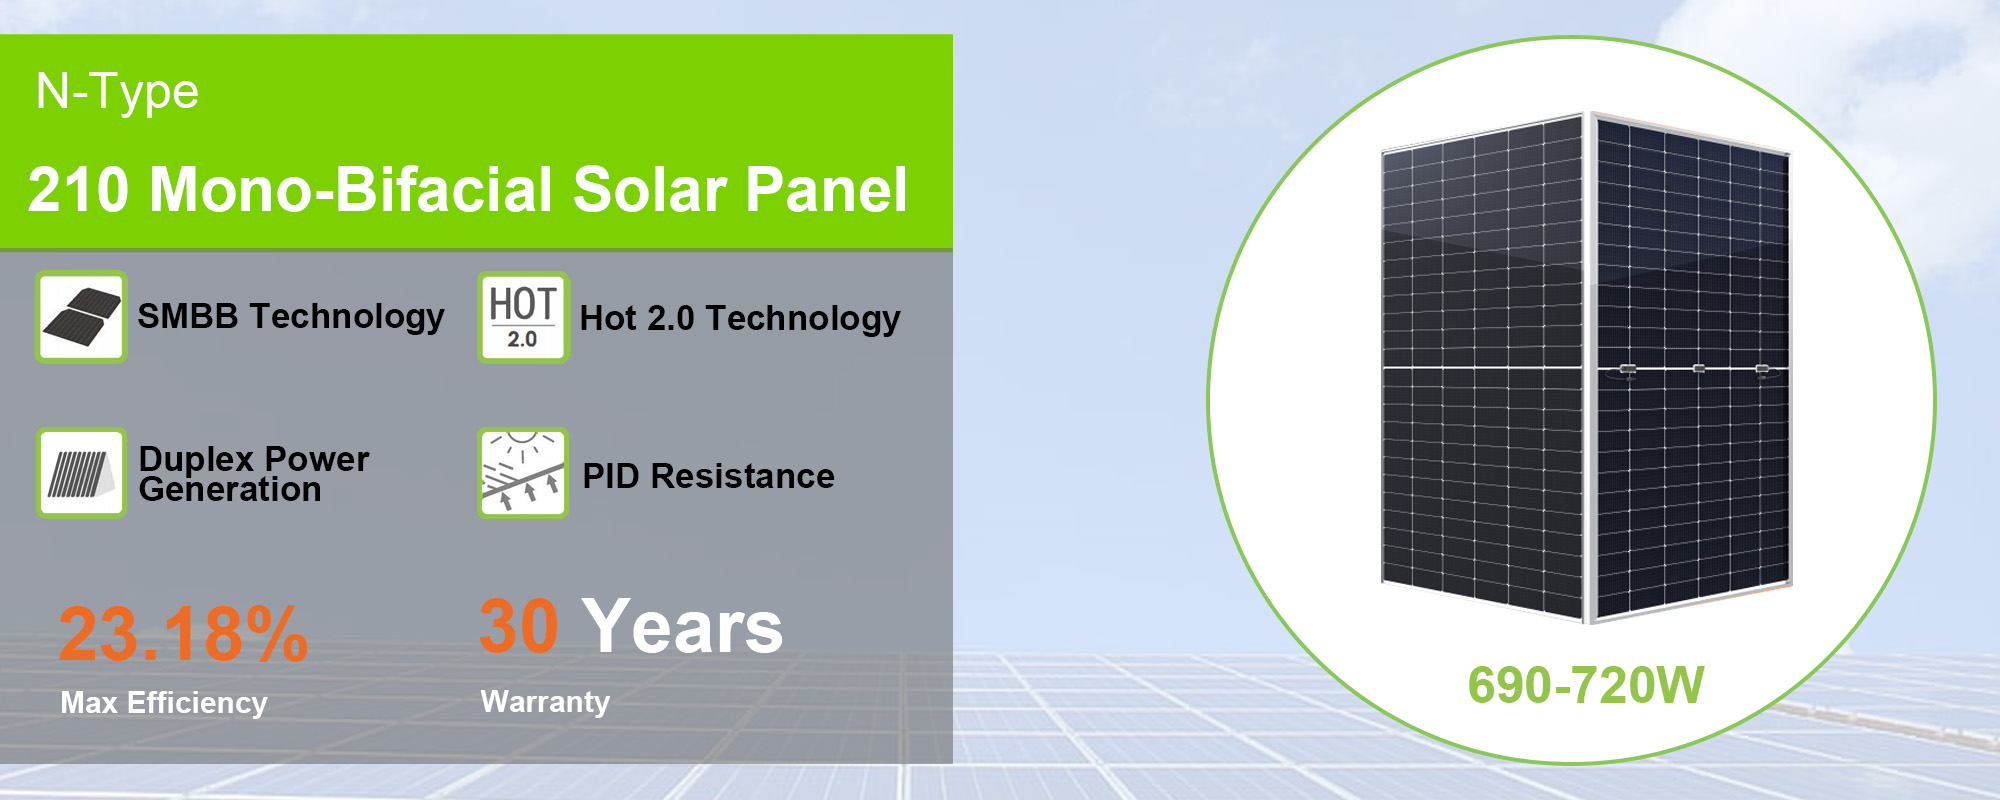 690-720W mono-bifacial n-type HBOWA solar panel